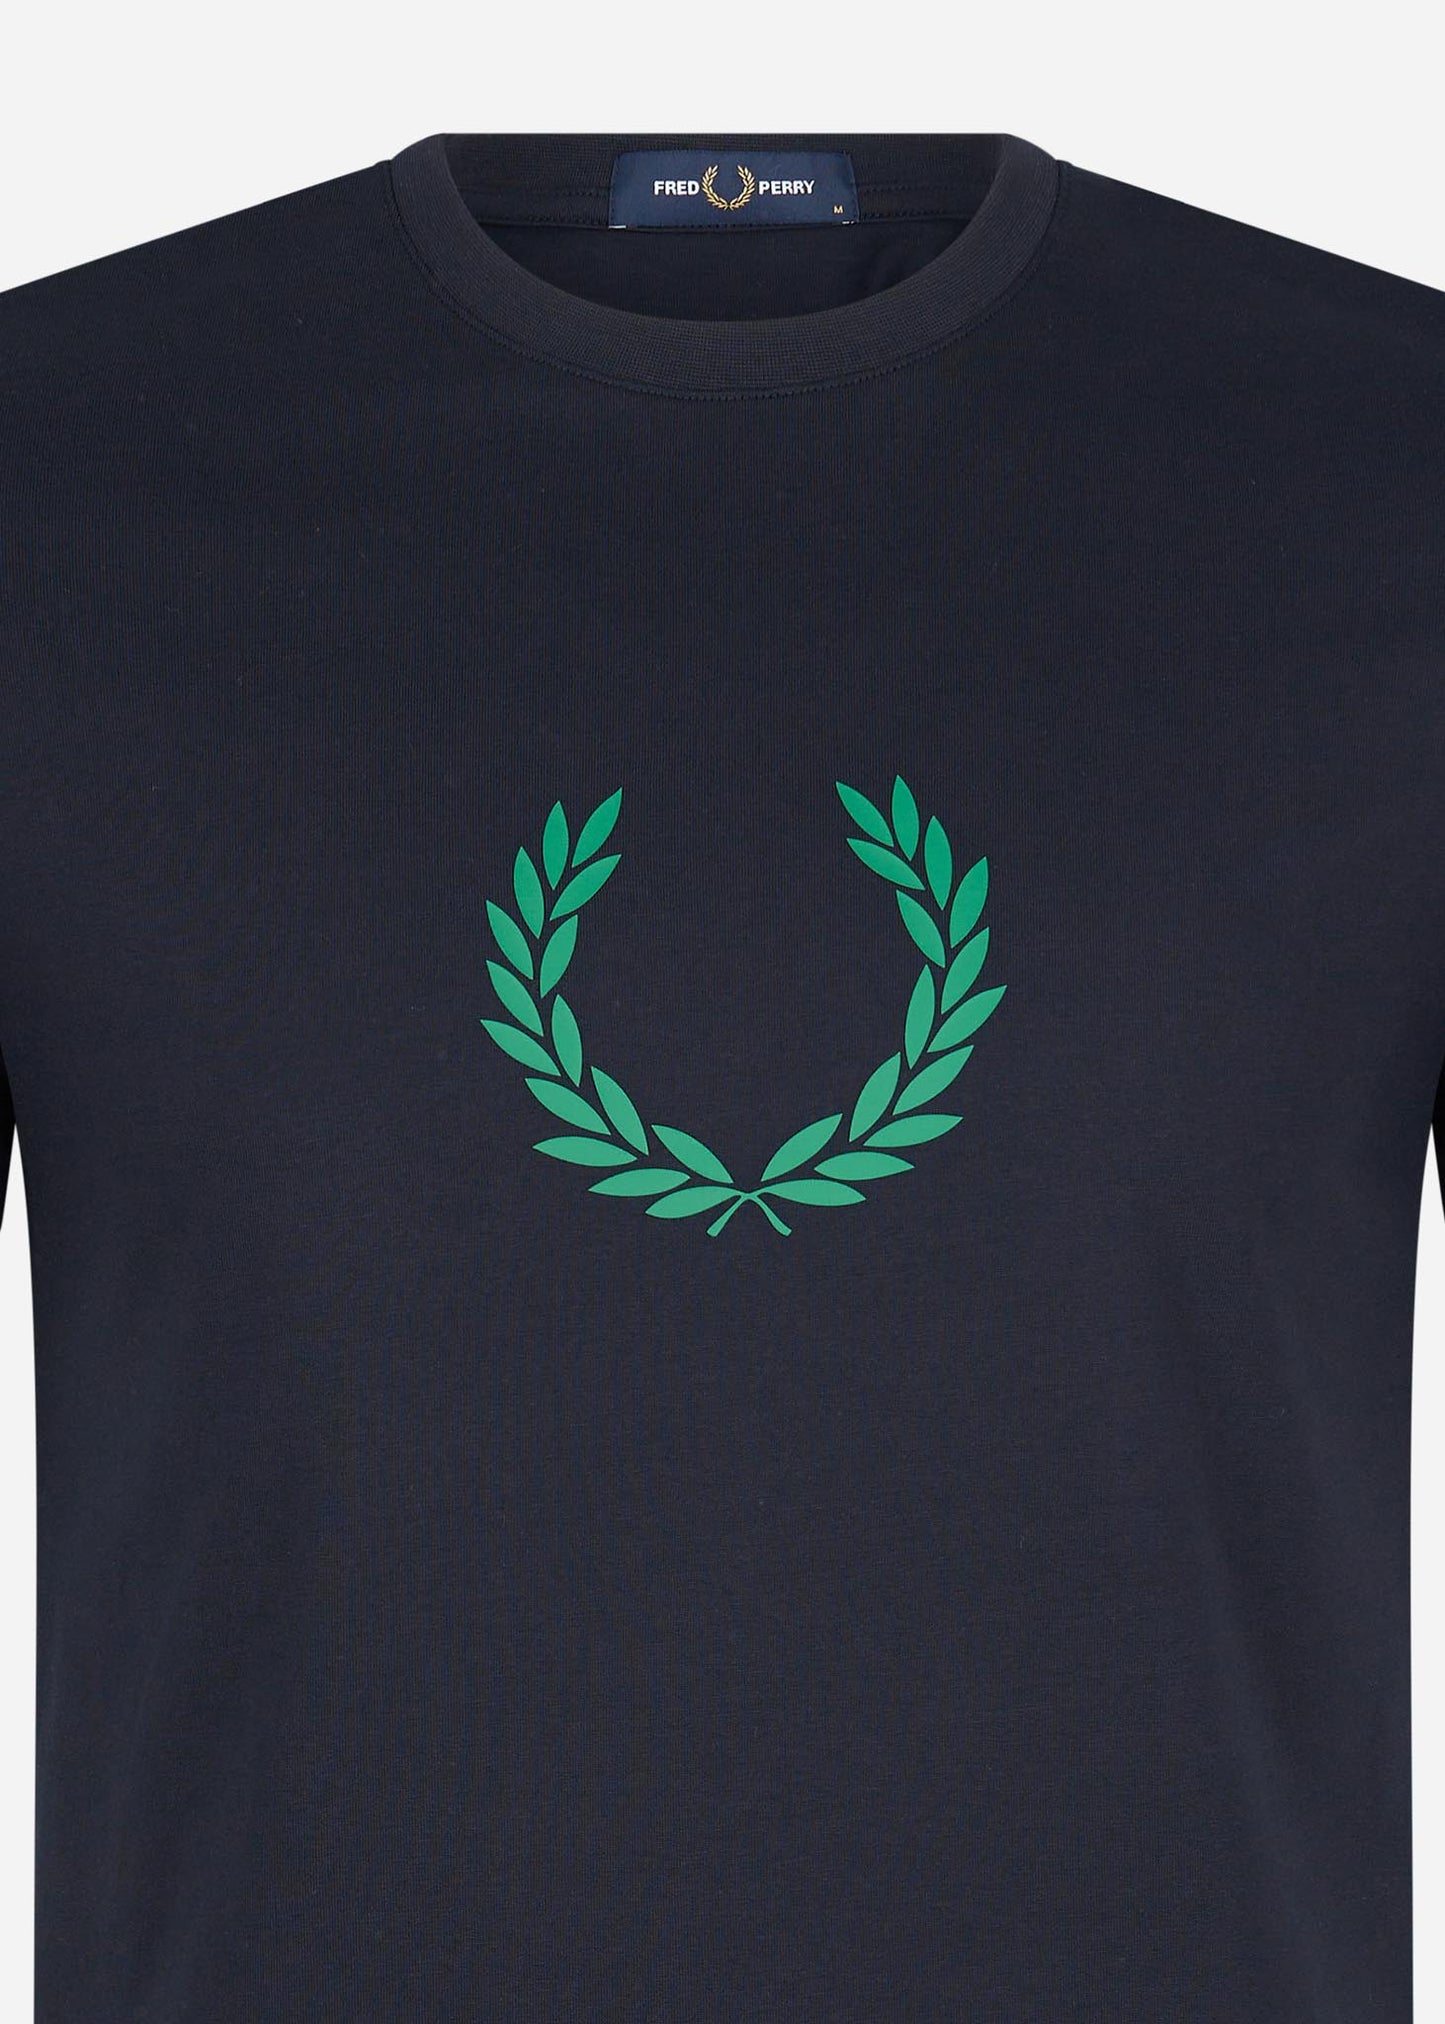 Laurel wreath graphic t-shirt - navy